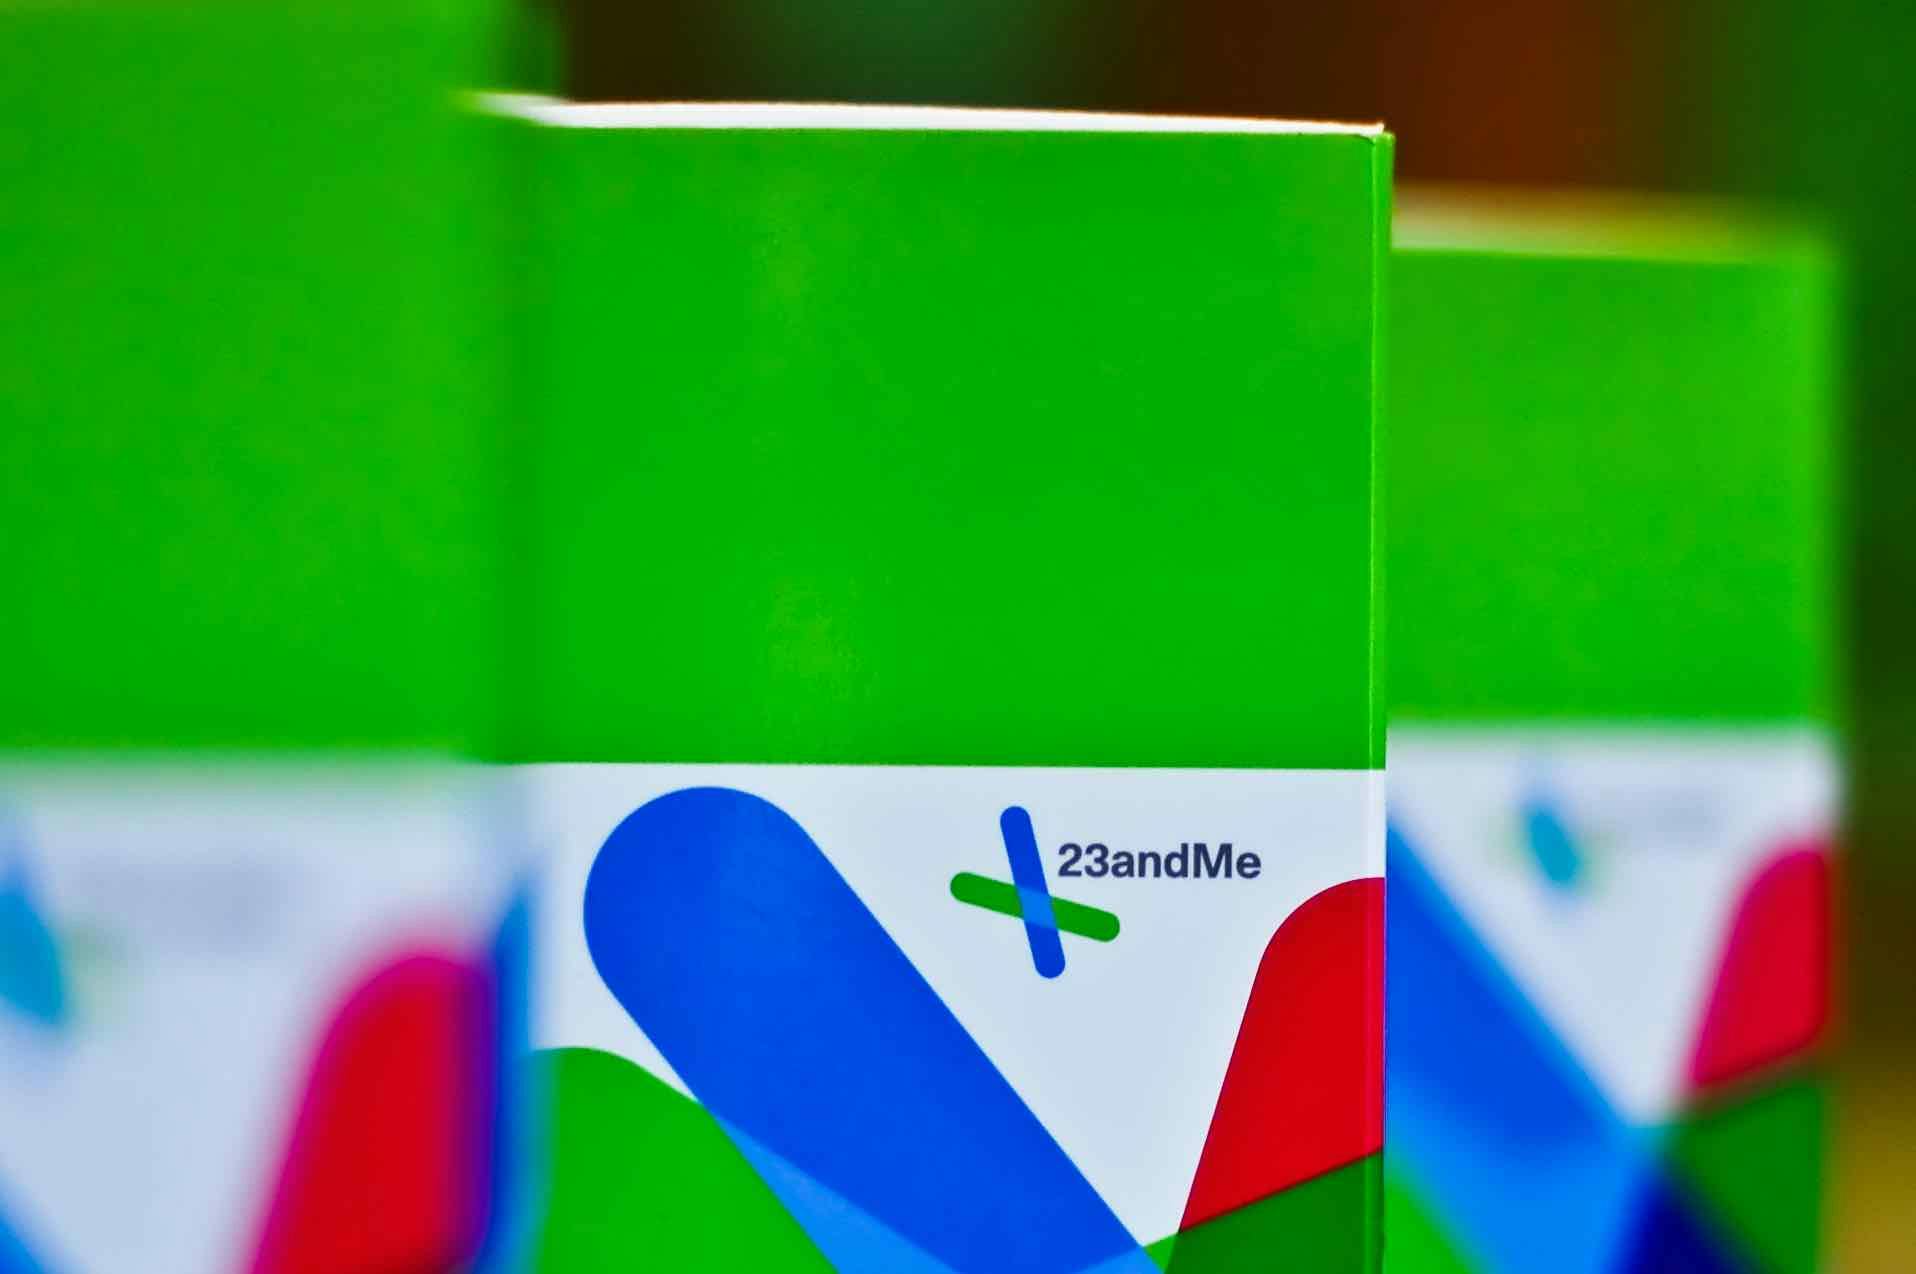 23andMe genetic testing kit (Nosha, via Flickr)